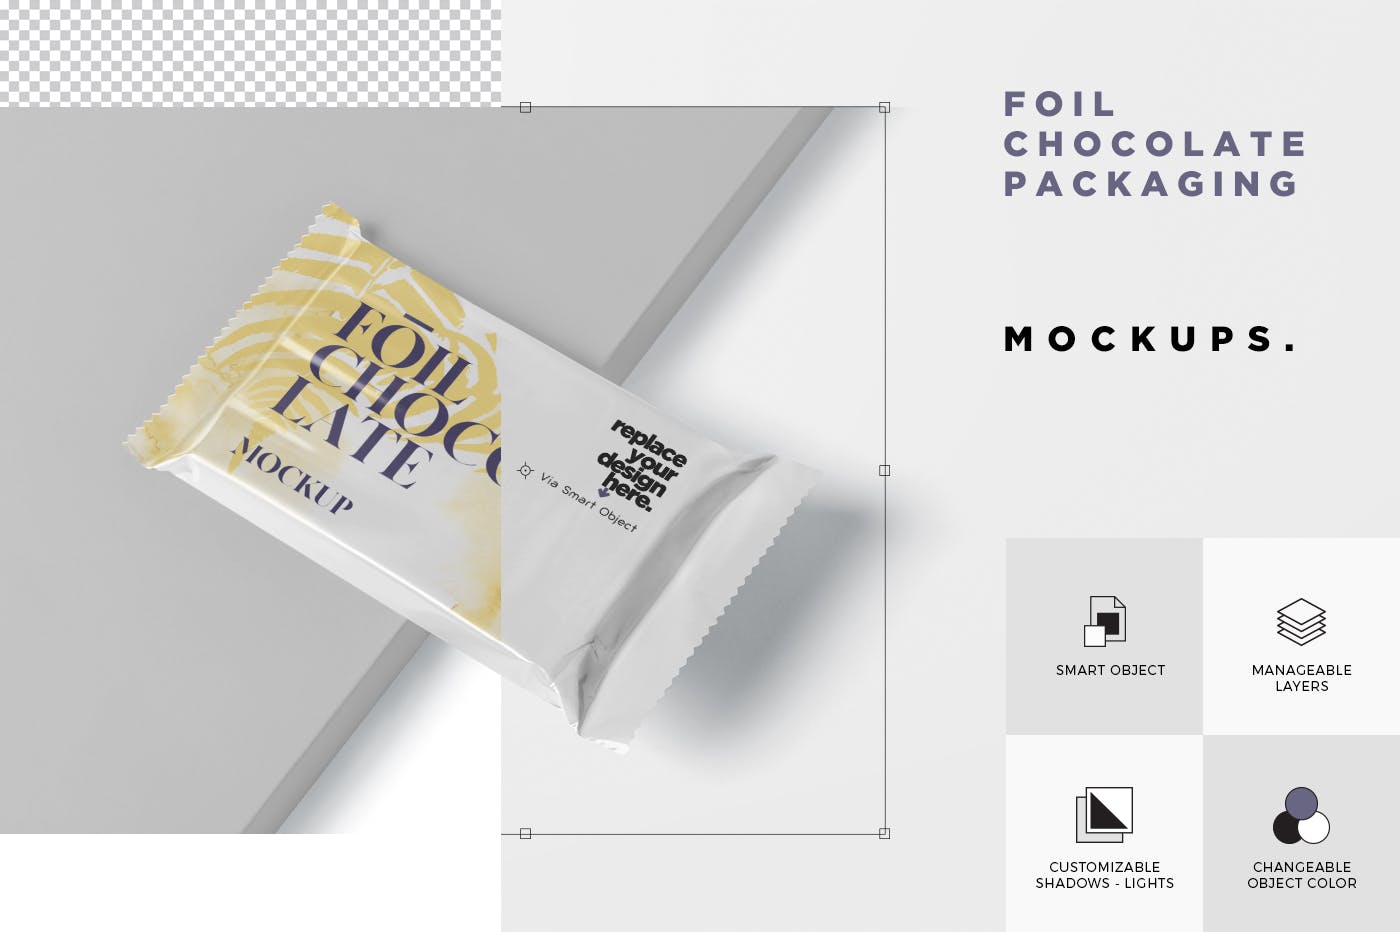 巧克力超薄铝箔纸包装设计效果图素材库精选 Foil Chocolate Packaging Mockup – Slim Size插图(5)